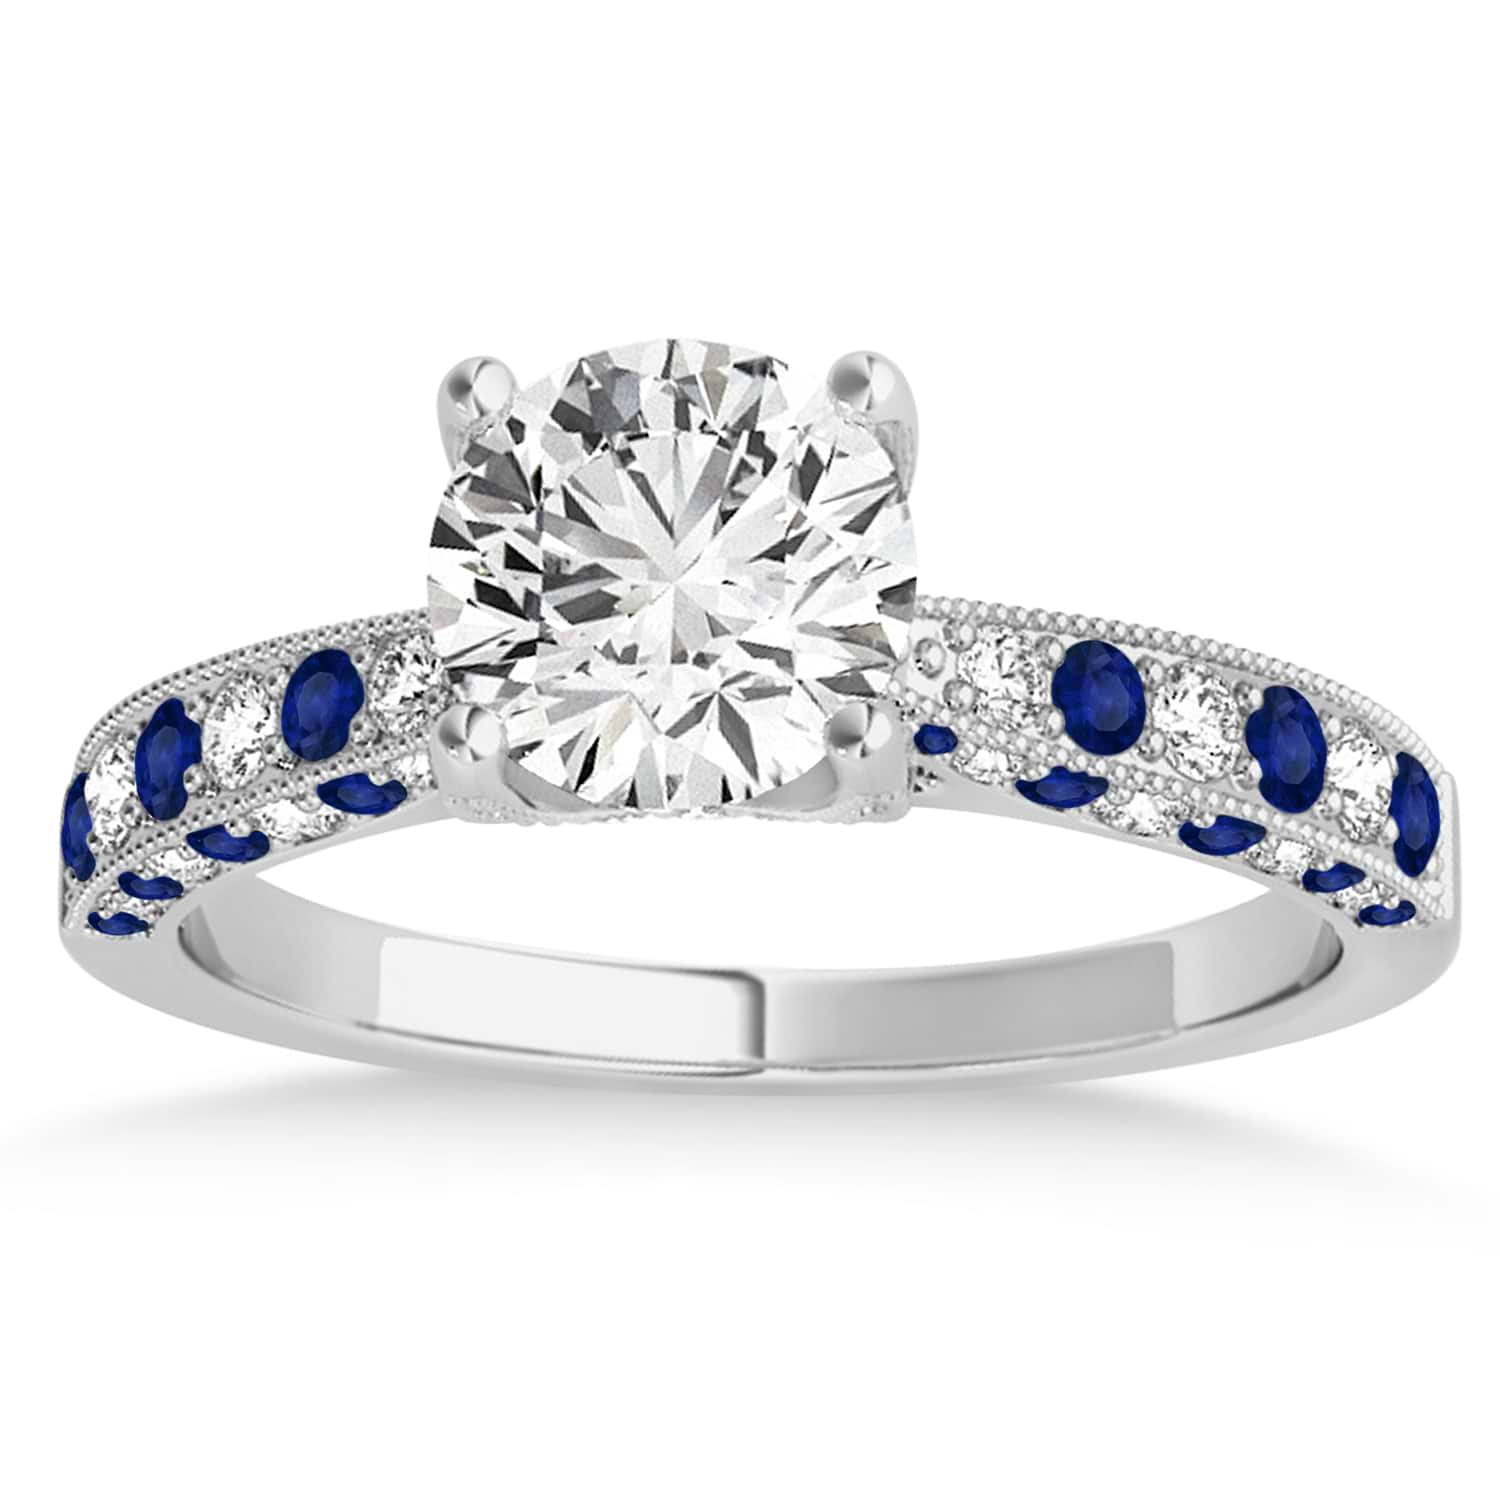 Alternating Diamond & Blue Sapphire Engravable Engagement Ring in 14k White Gold (0.45ct)